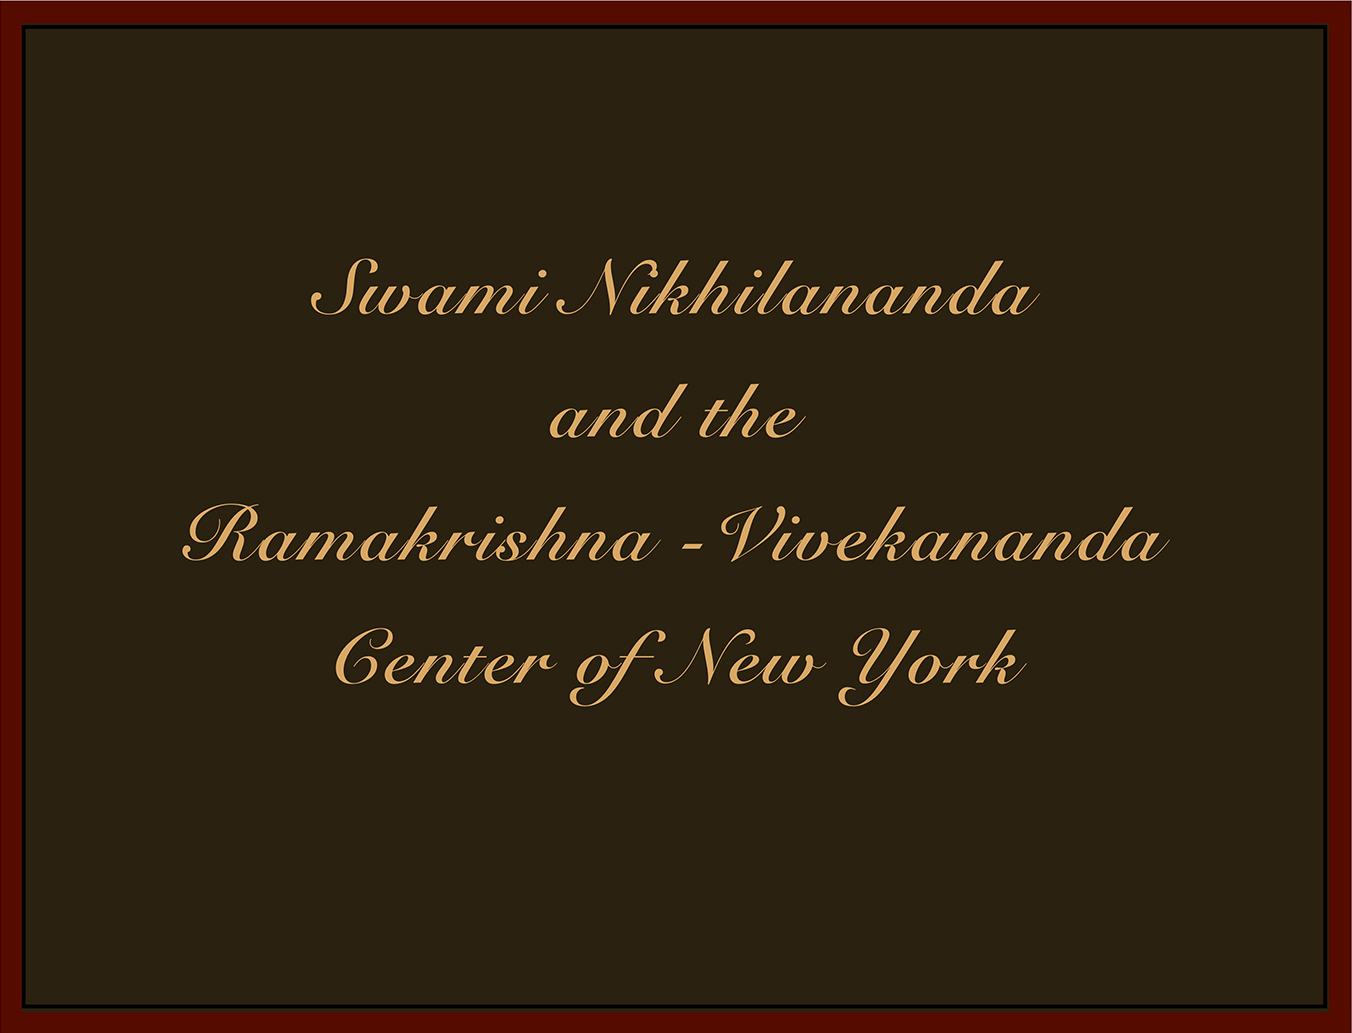 Swami Nikhilananda and the Ramakrisha-Vivekananda Center of New York.